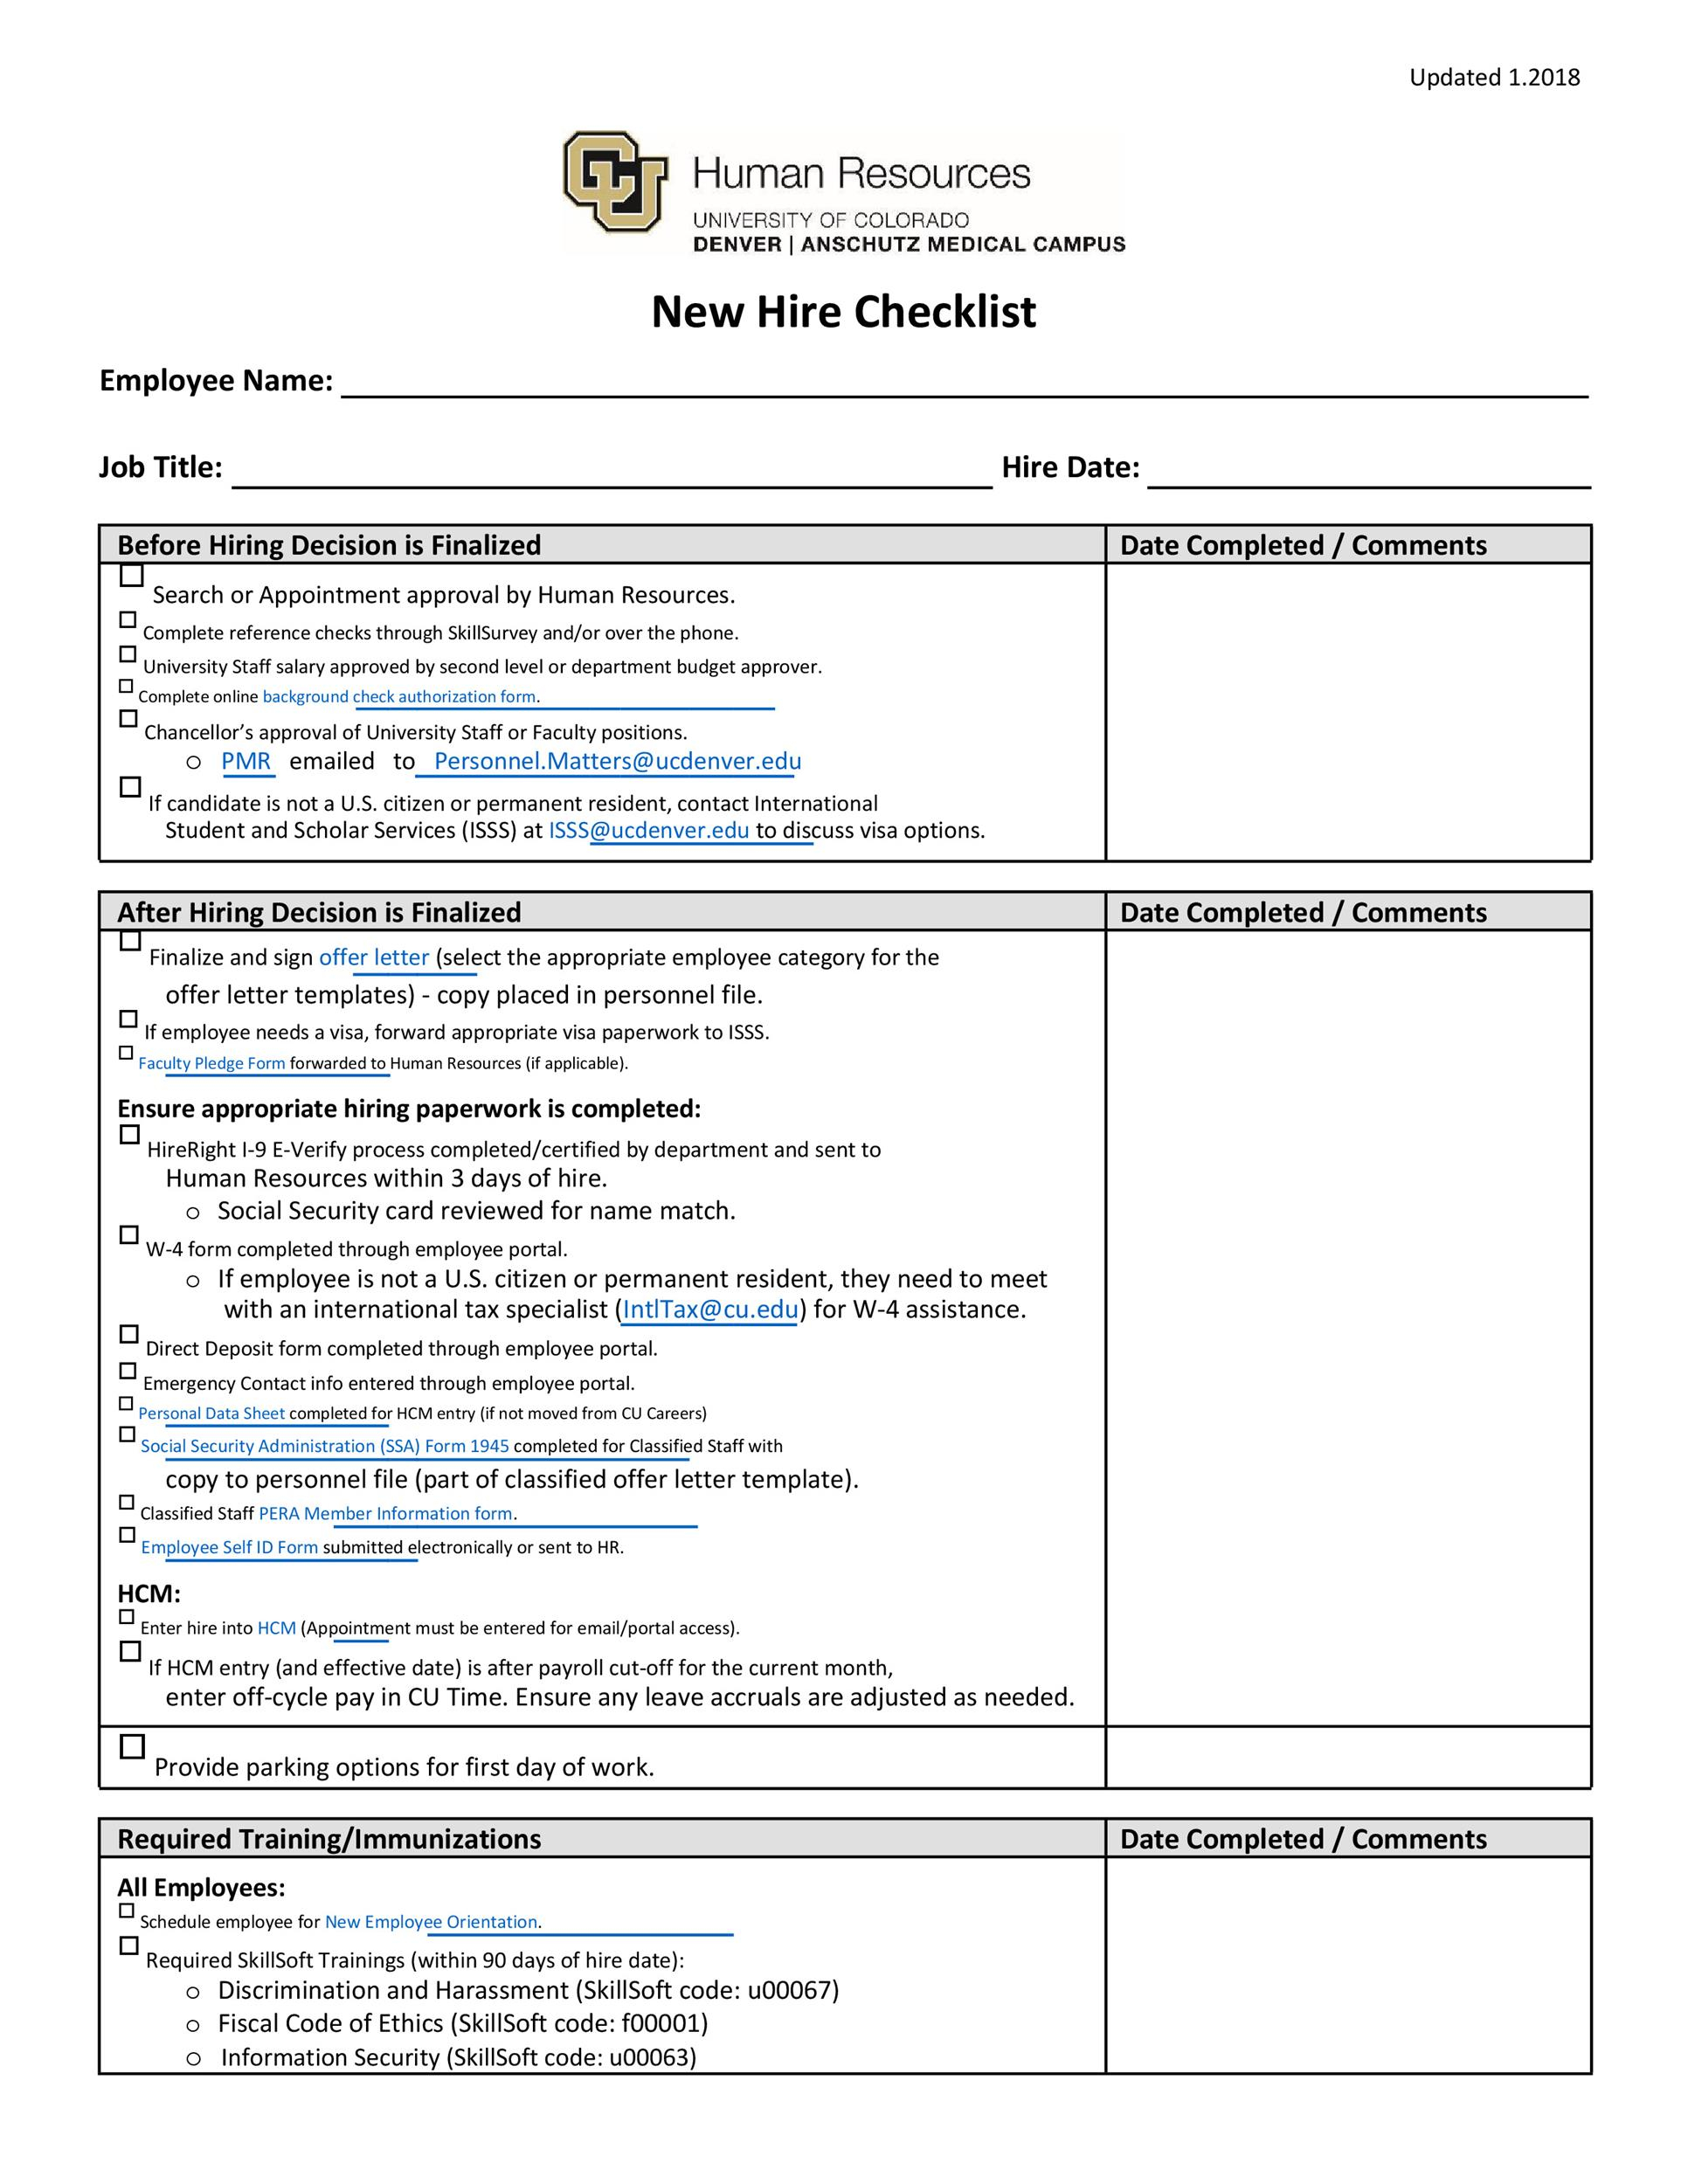 10+ New Hire Paperwork Checklist Template - PSD Template Within Pre Employment Checklist Template For Pre Employment Checklist Template